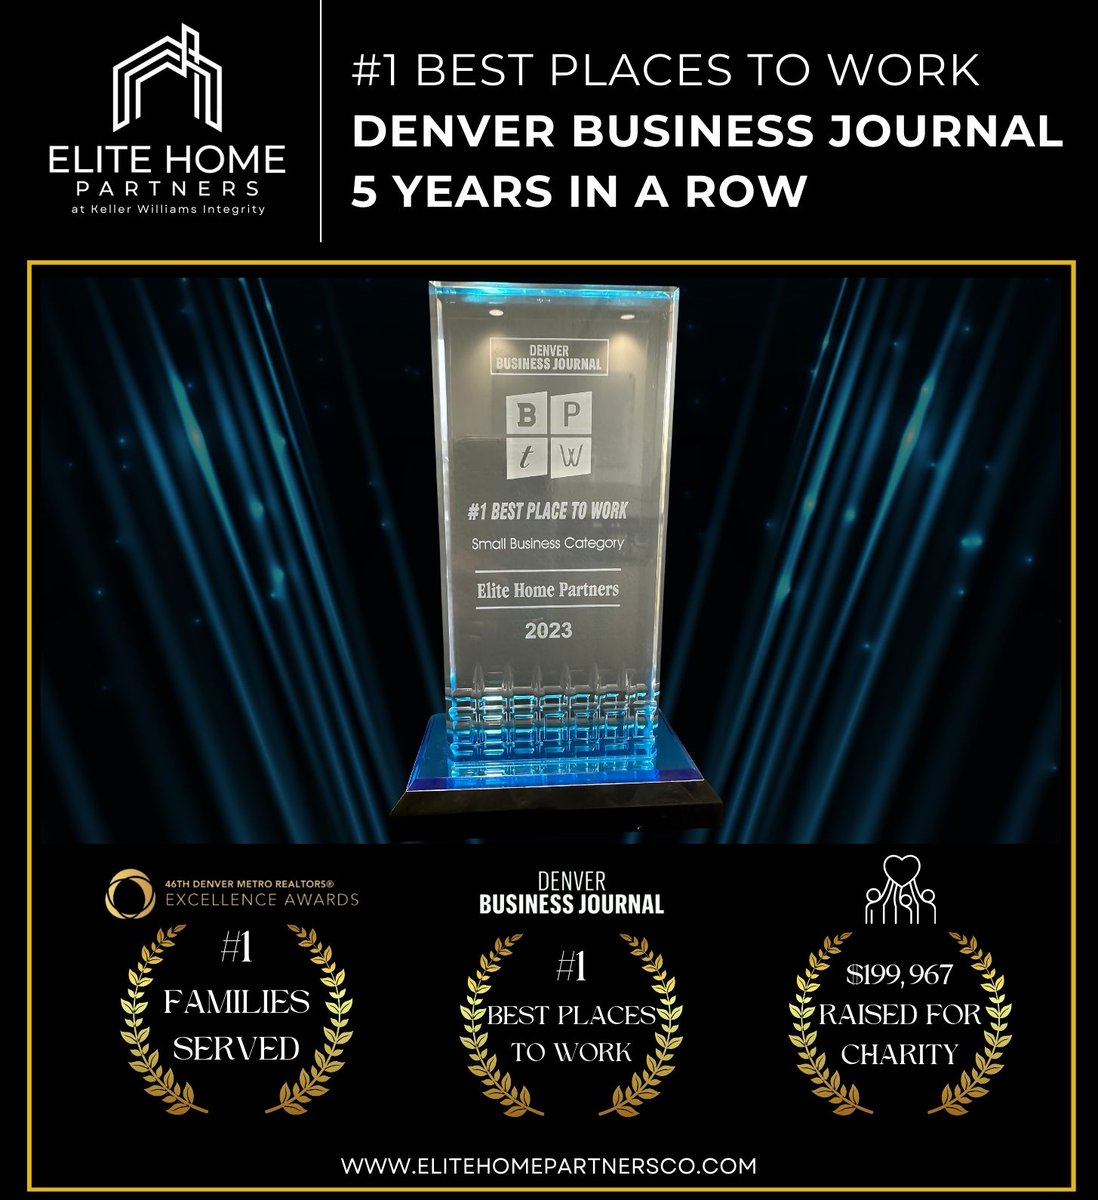 🌟 Exciting news! For the fifth year running, we've been named the #1 Best Place to Work by the Denver Business Journal! 🏆 

#BestPlaceToWork #elitehomepartnersco #denverrealestate #coloradorealestate #TeamWorkMakesTheDreamWork #kellerwilliams #werehiring #joinourteam